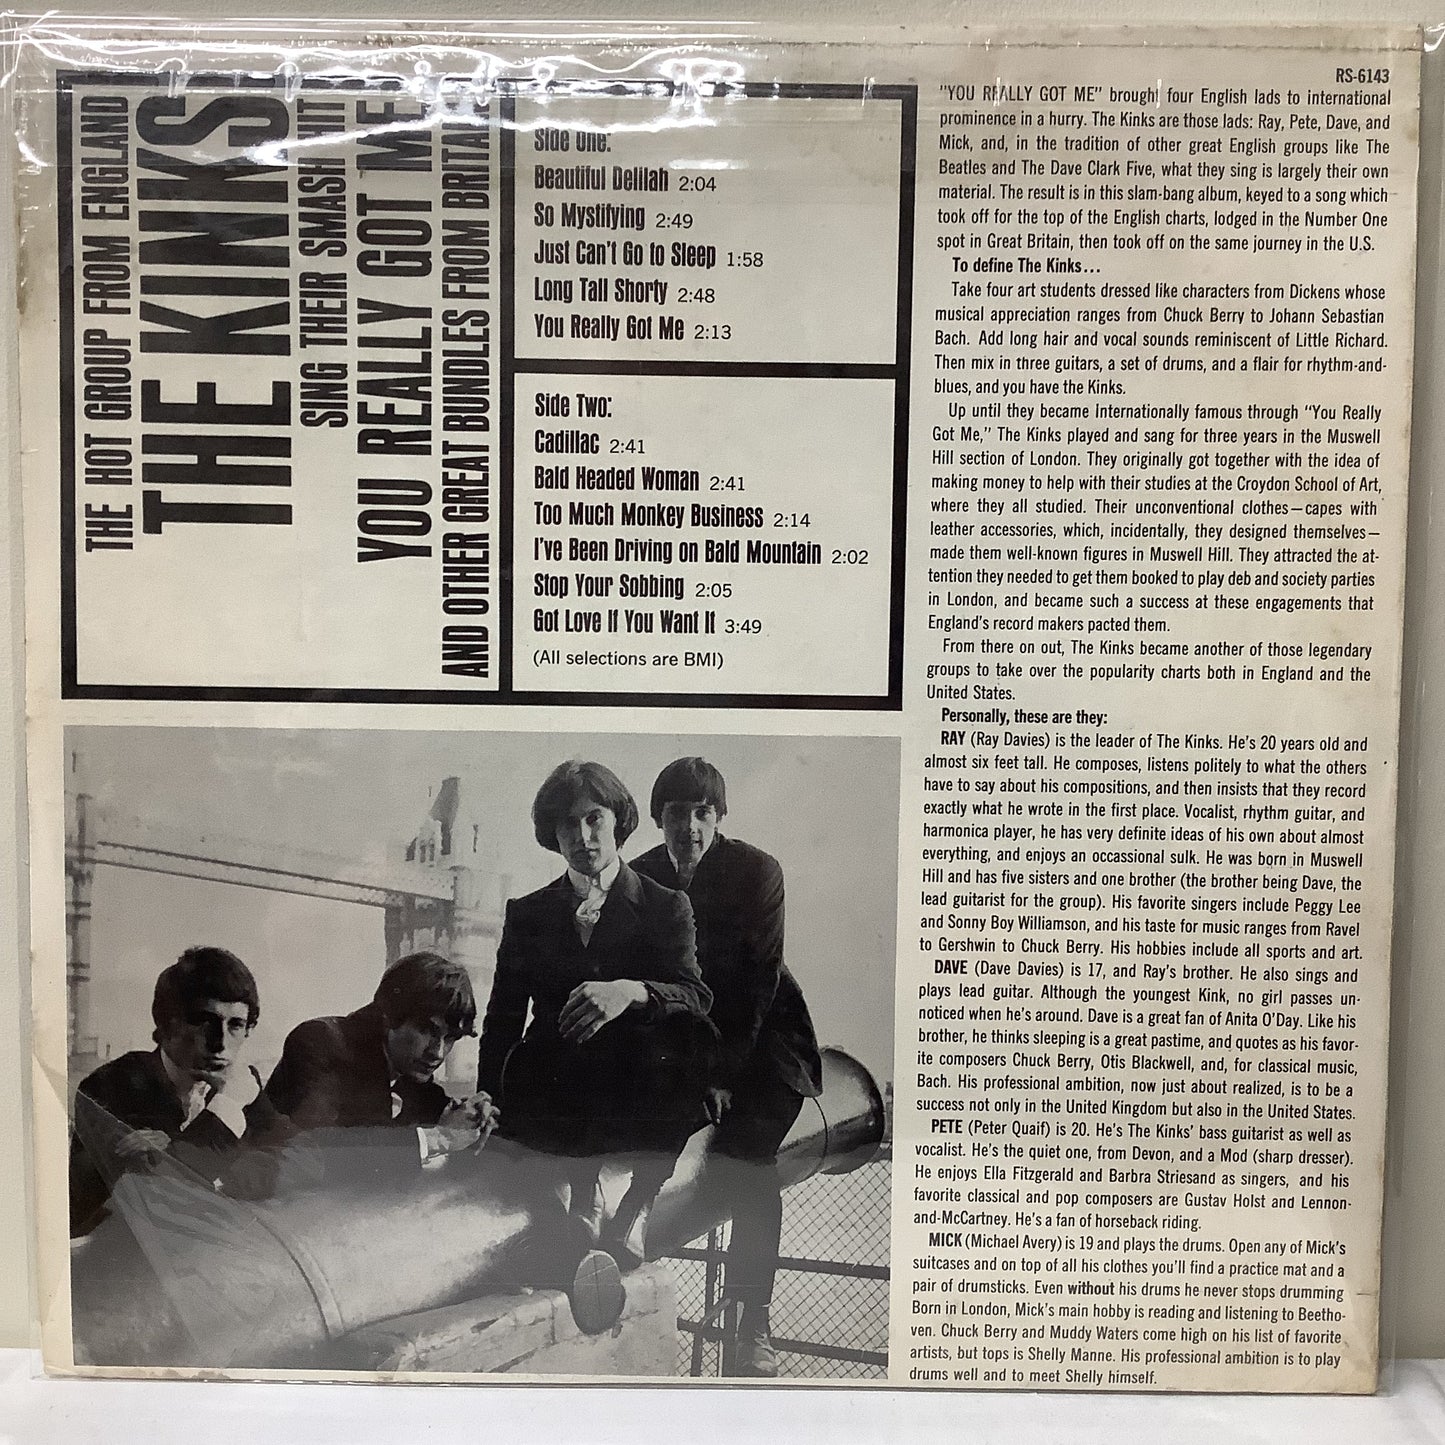 The Kinks - Realmente me tienes - Reprise LP